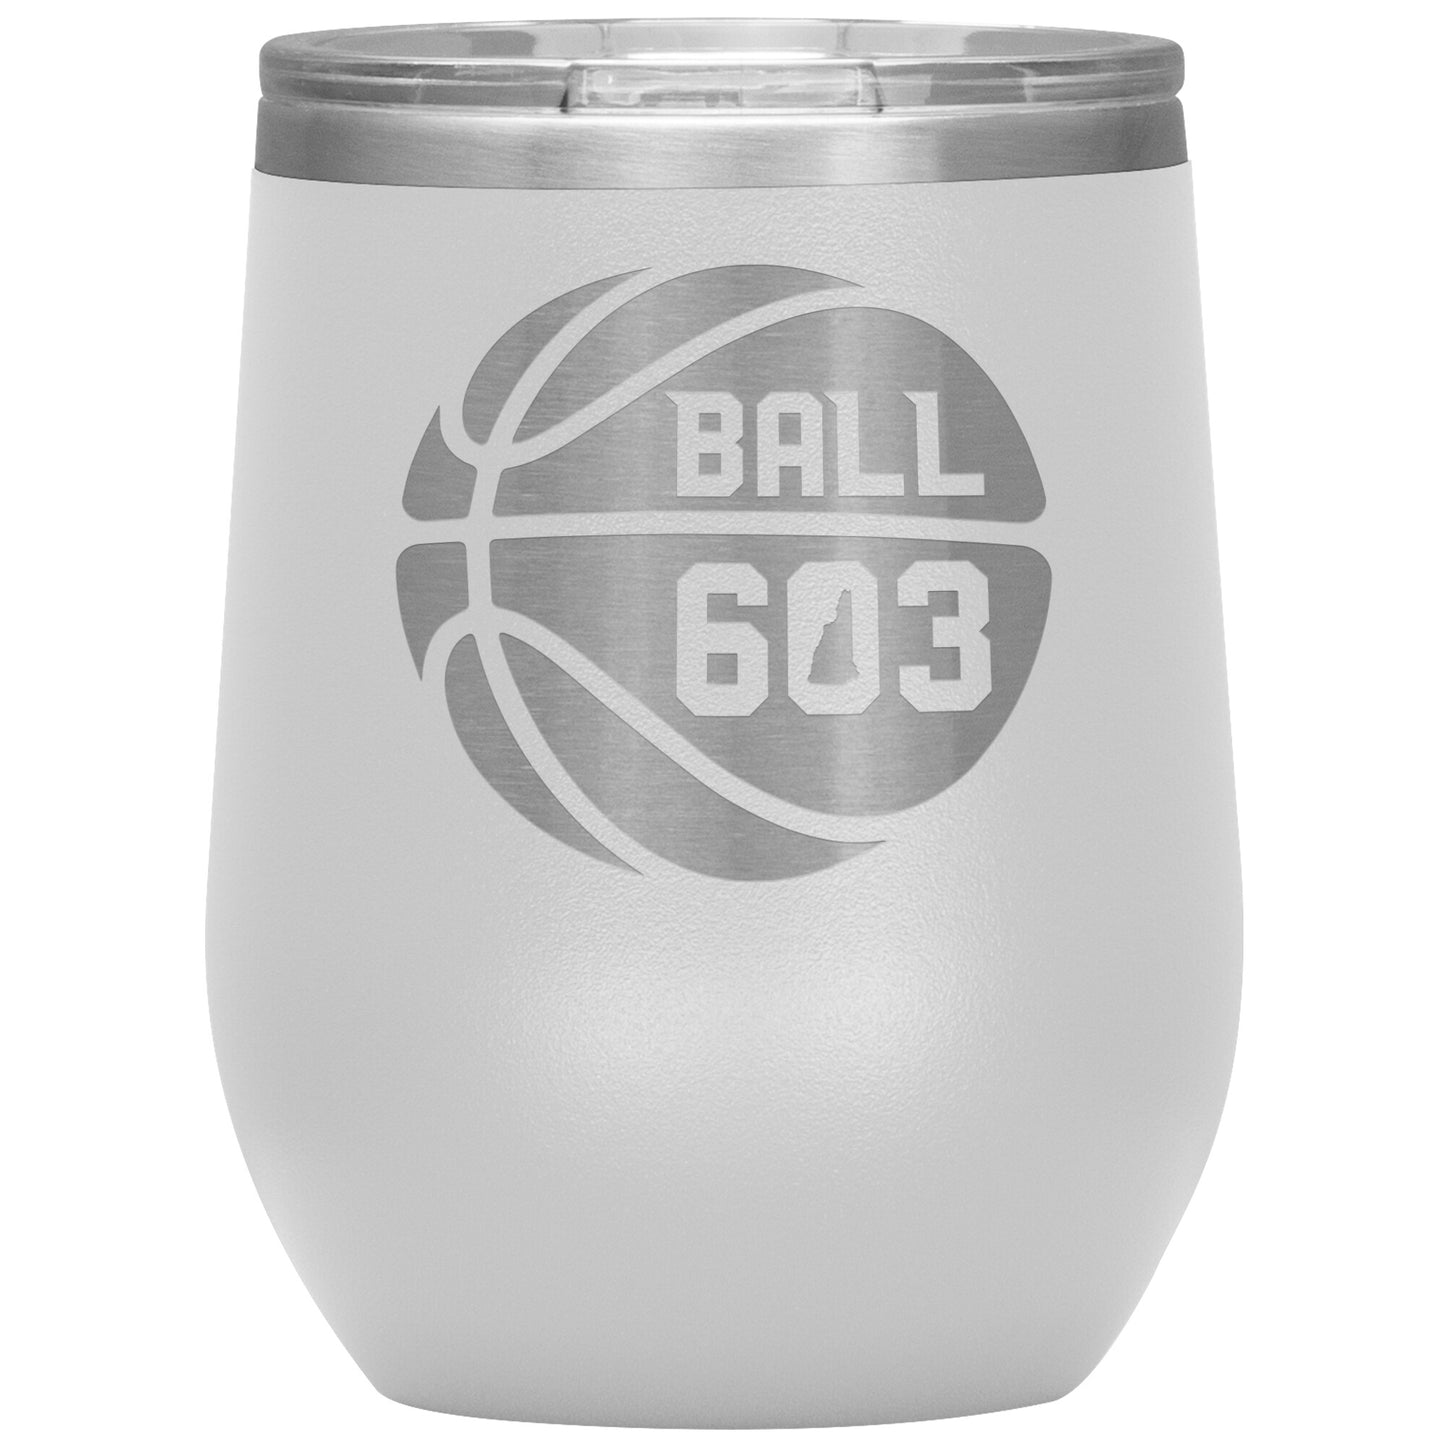 Ball 603 Wine Tumbler (12oz)